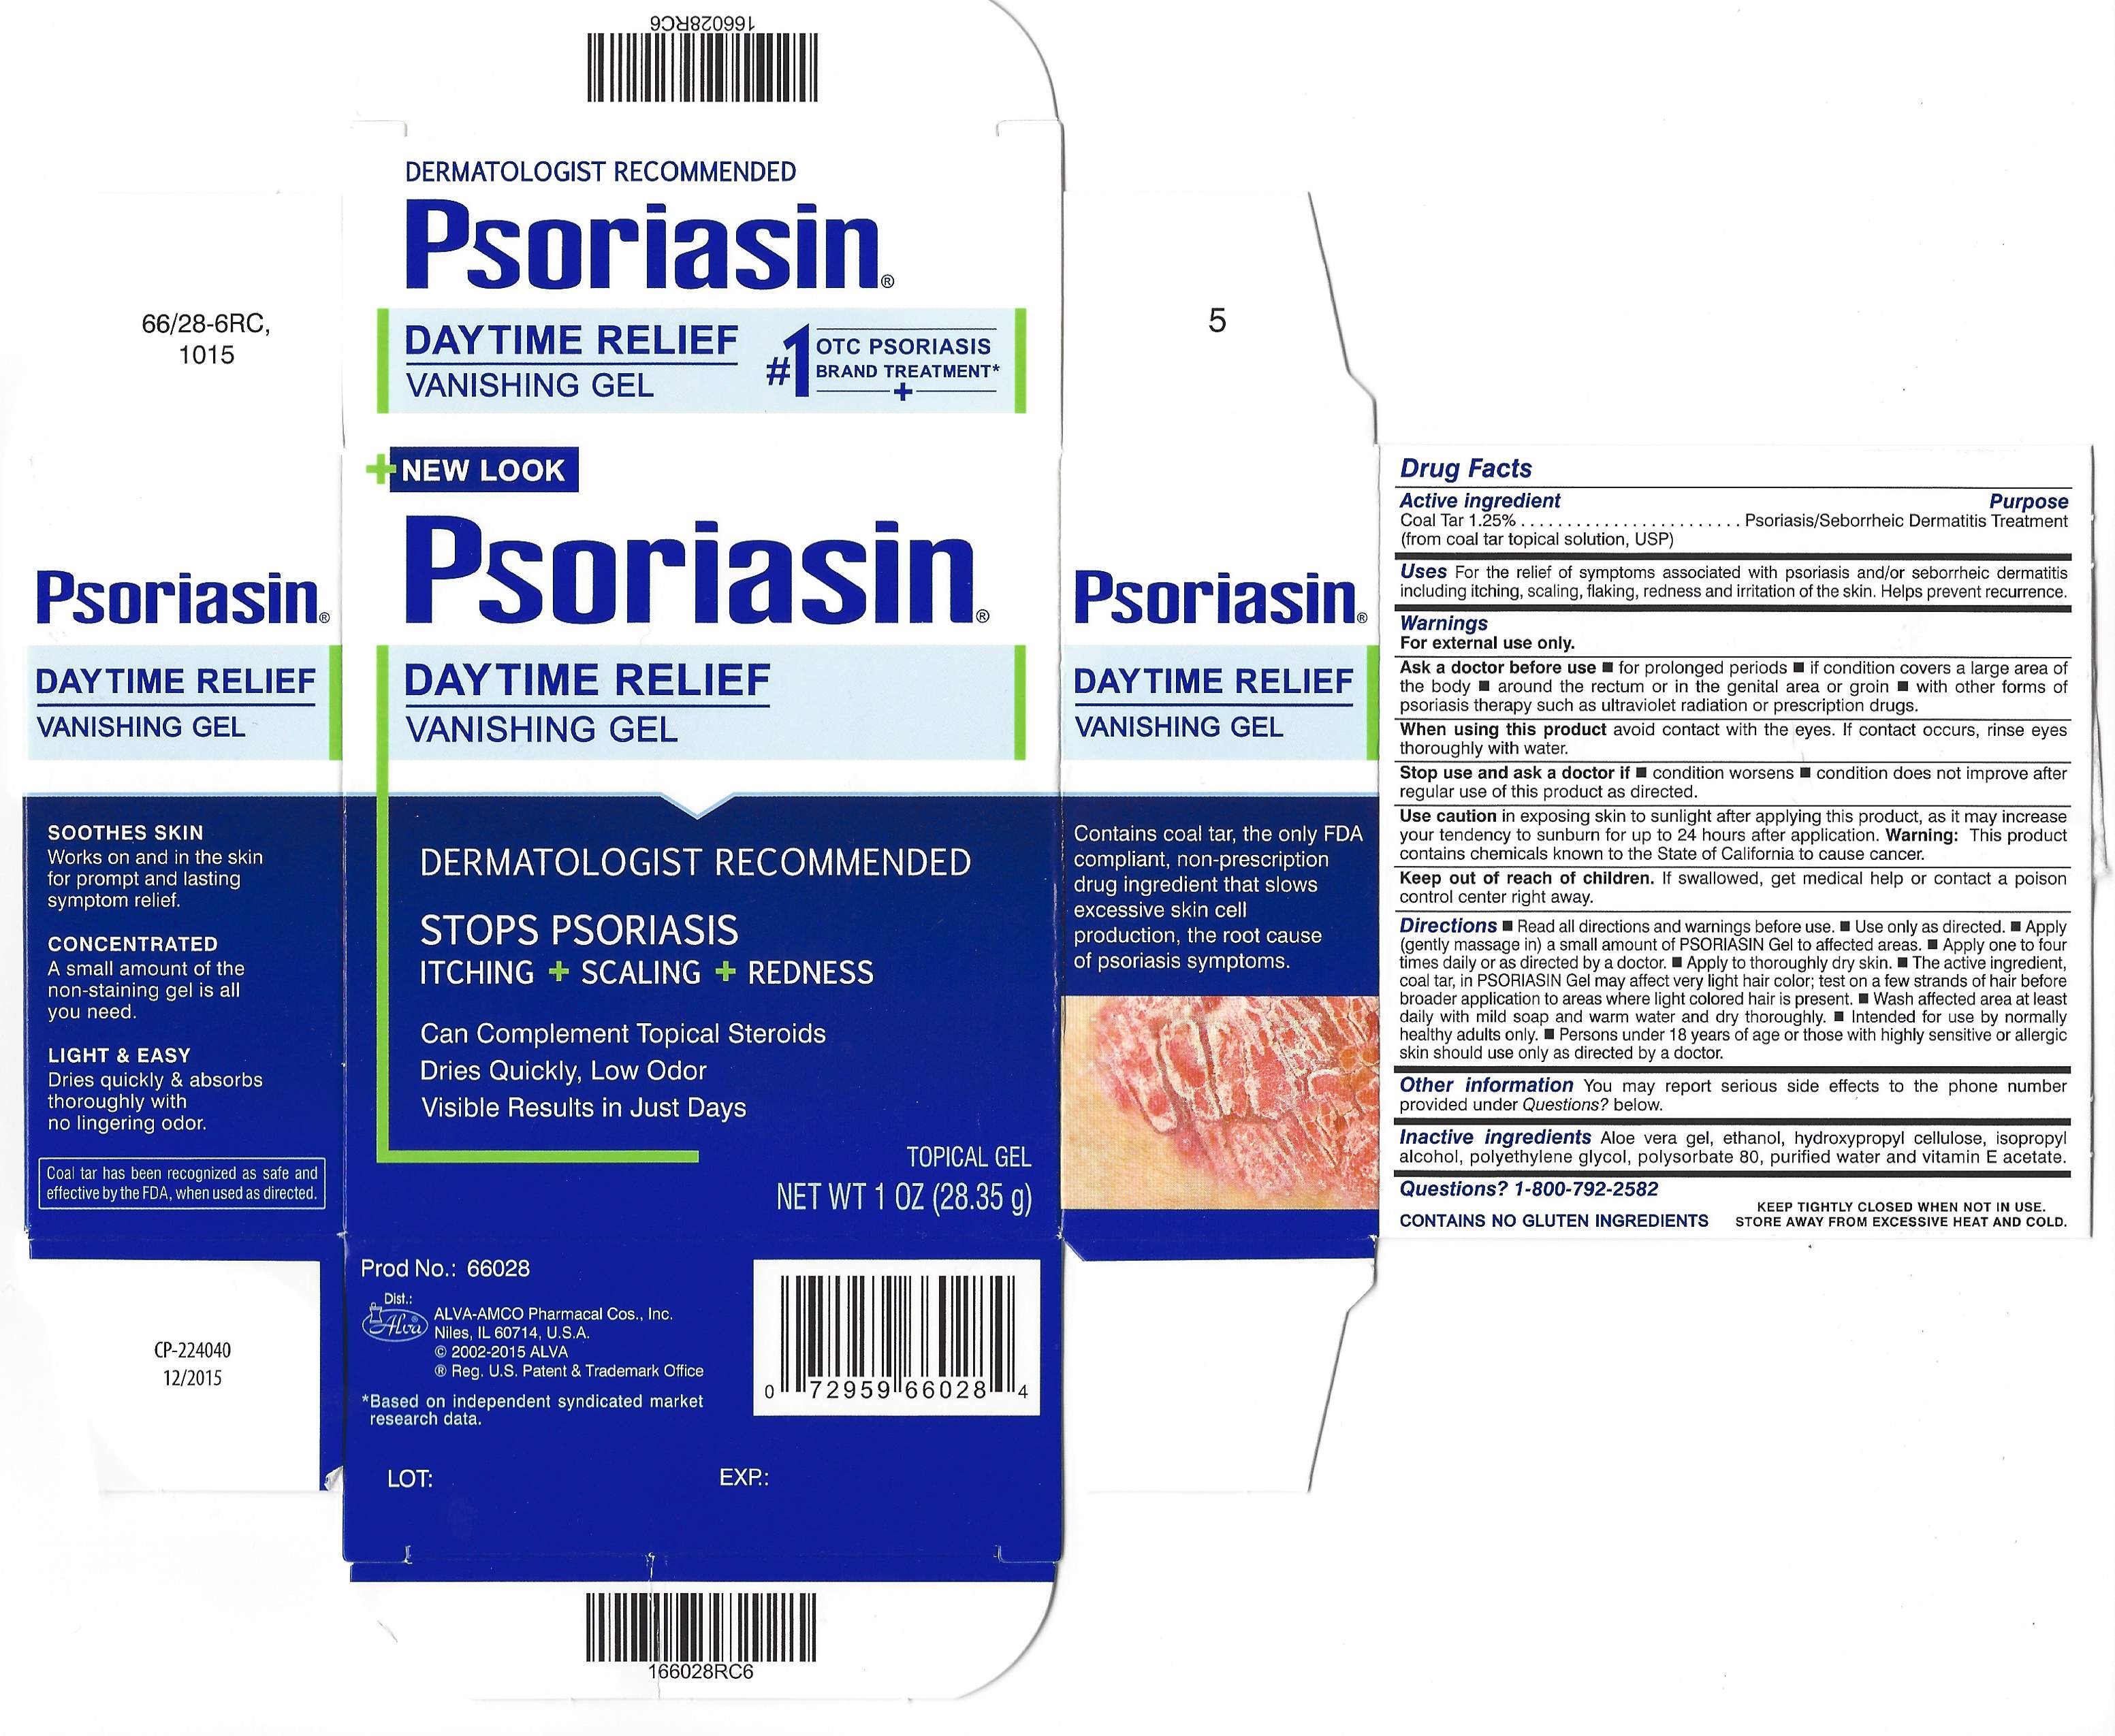 Package label for Psoriasin Gel